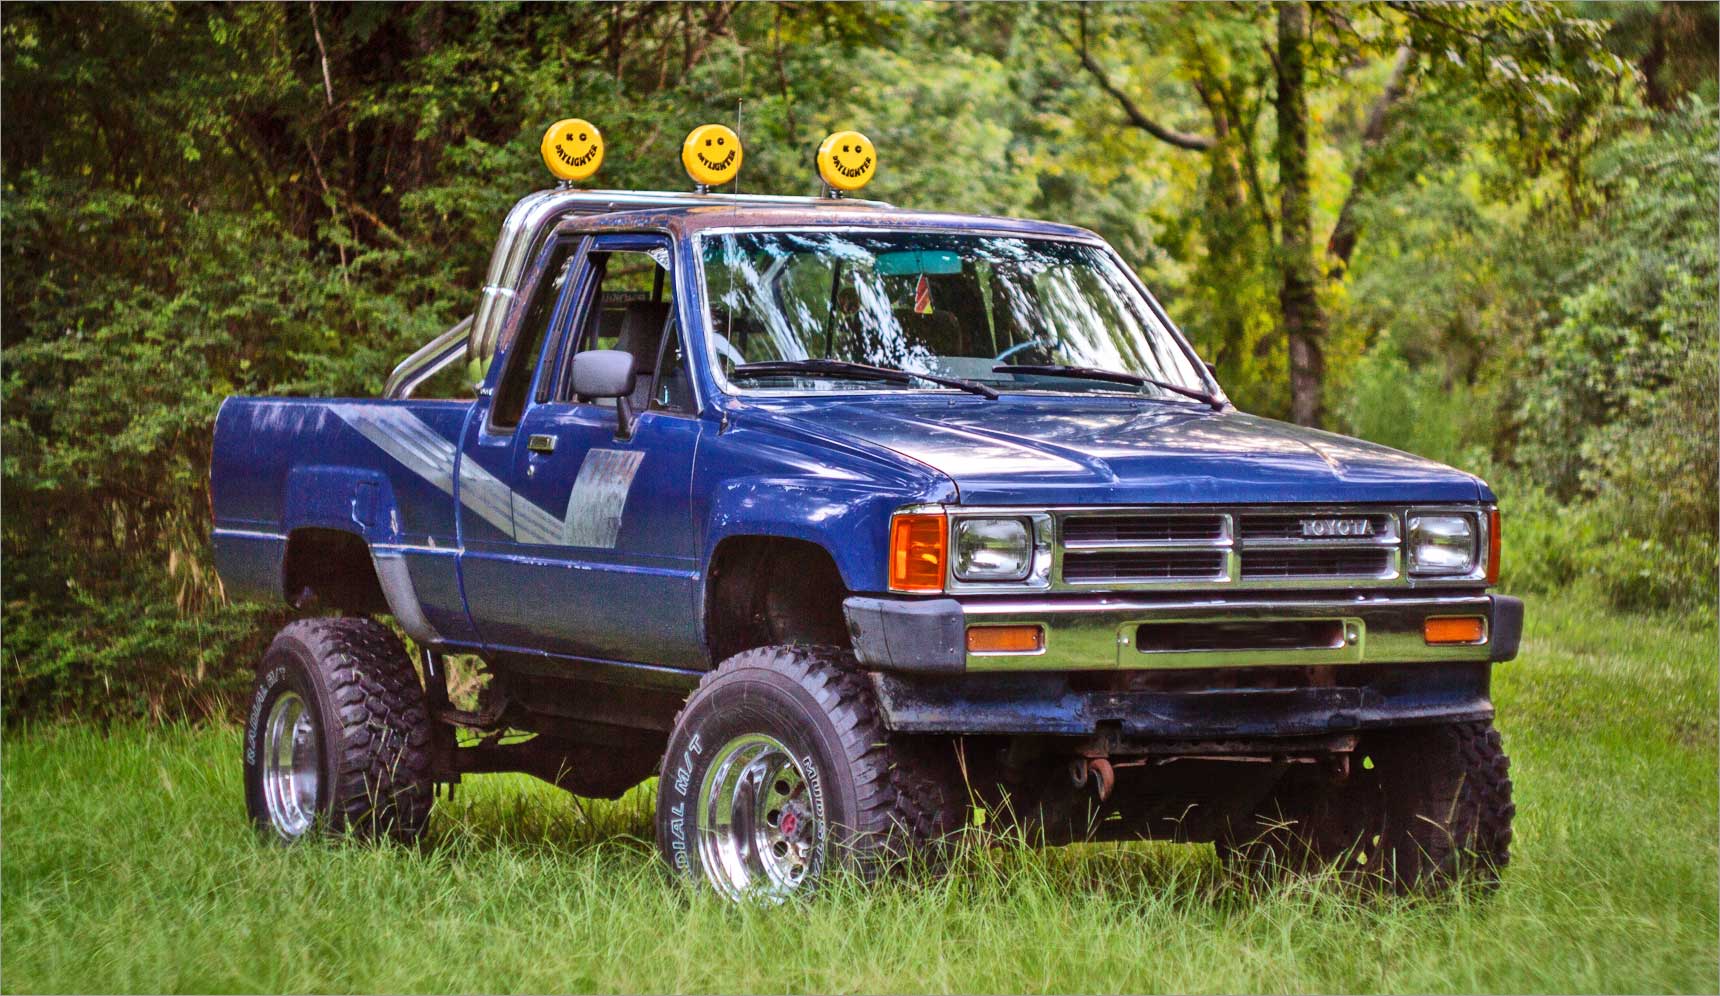 Kolben's 1987 Toyota Pickup